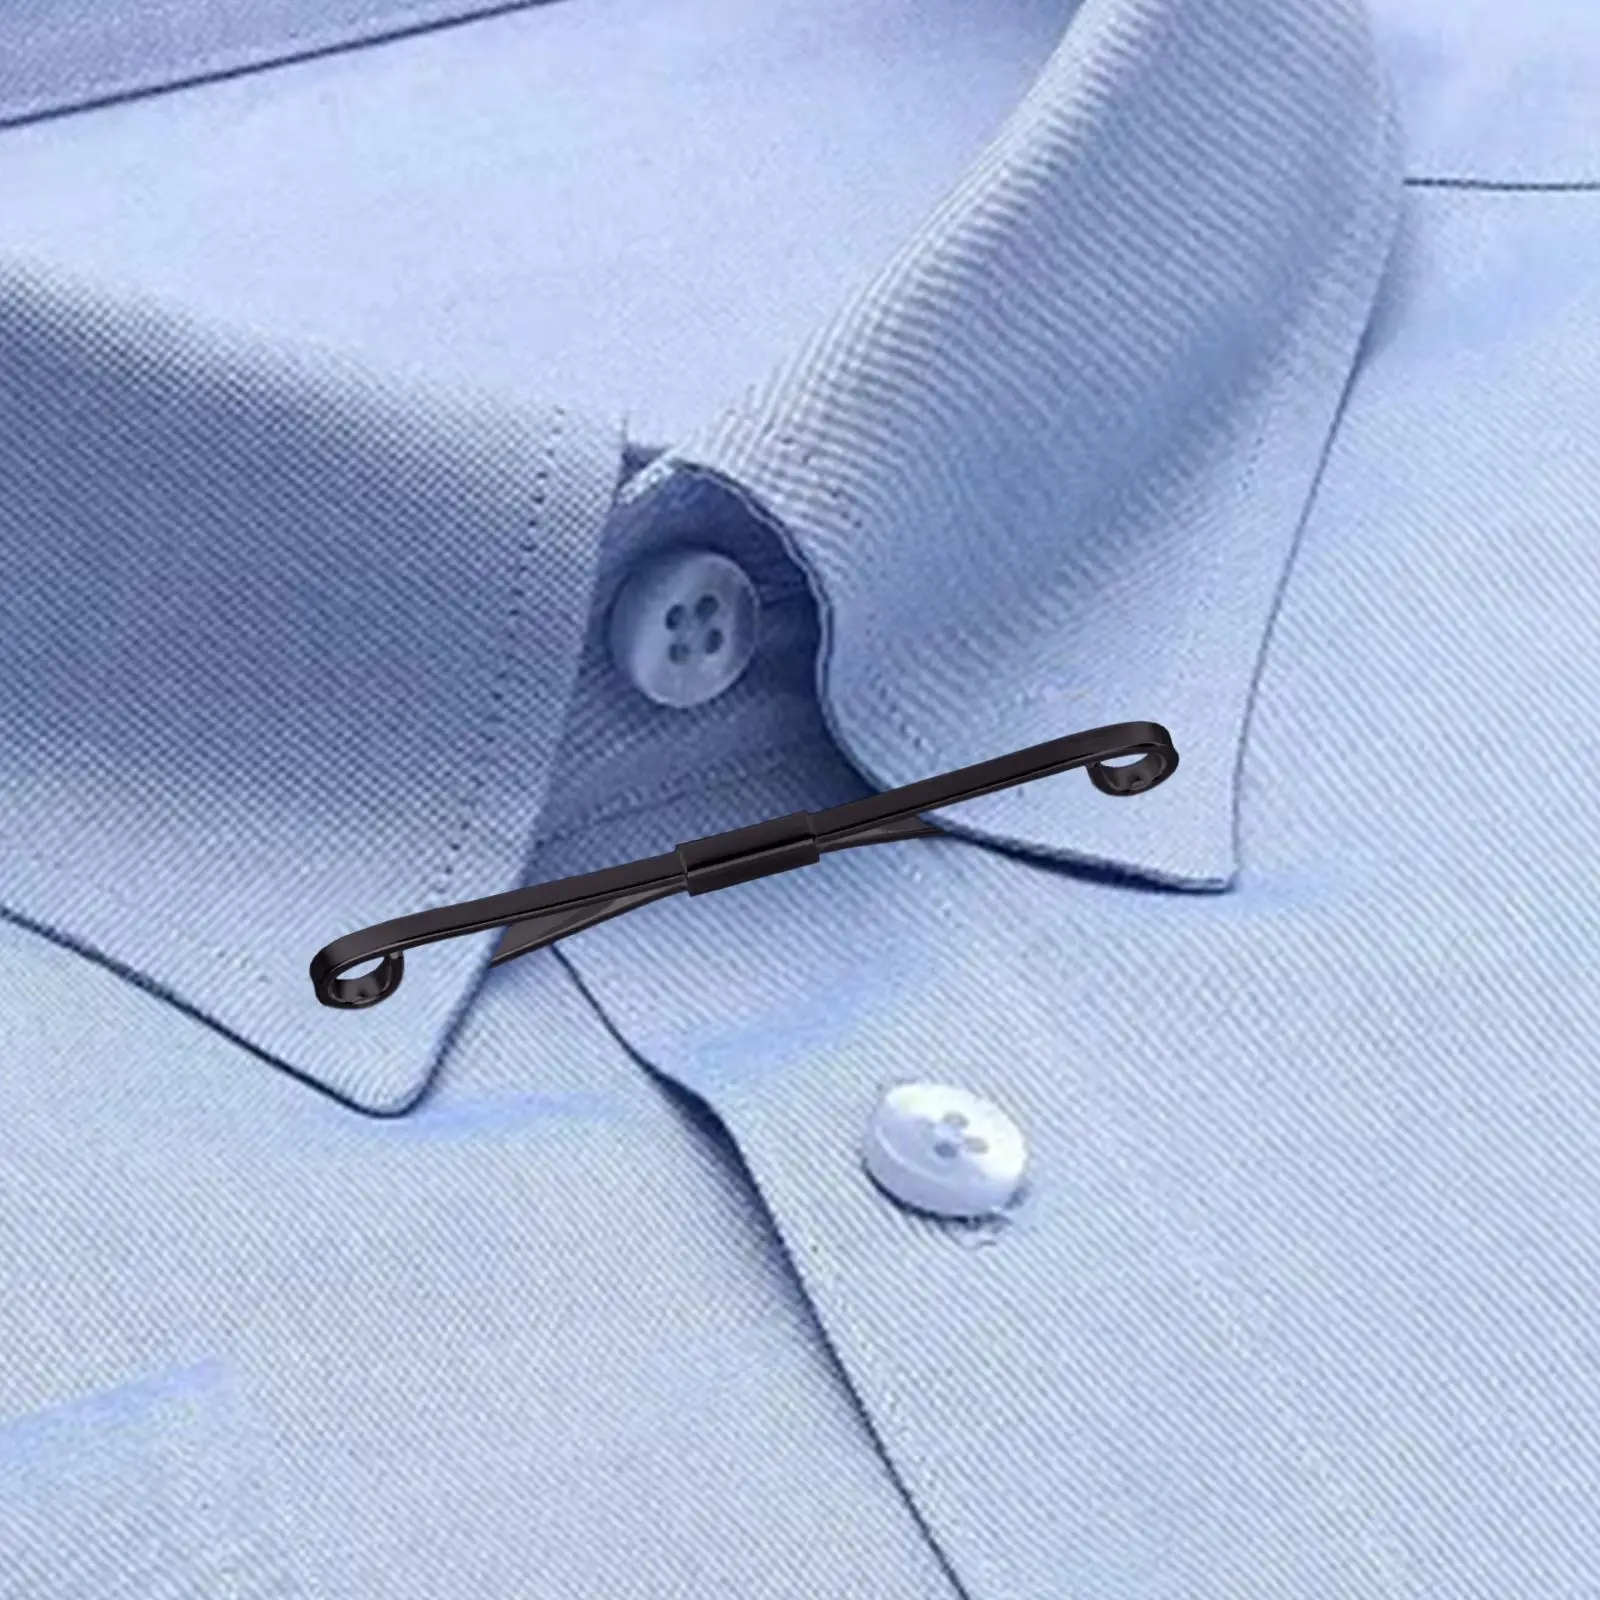 Classic Tie Collar Bar Pin Cravat Clasps Necktie Pinch Shirt Collar Clip Tie Clips Collar Pin Formal for Men's Business Wedding